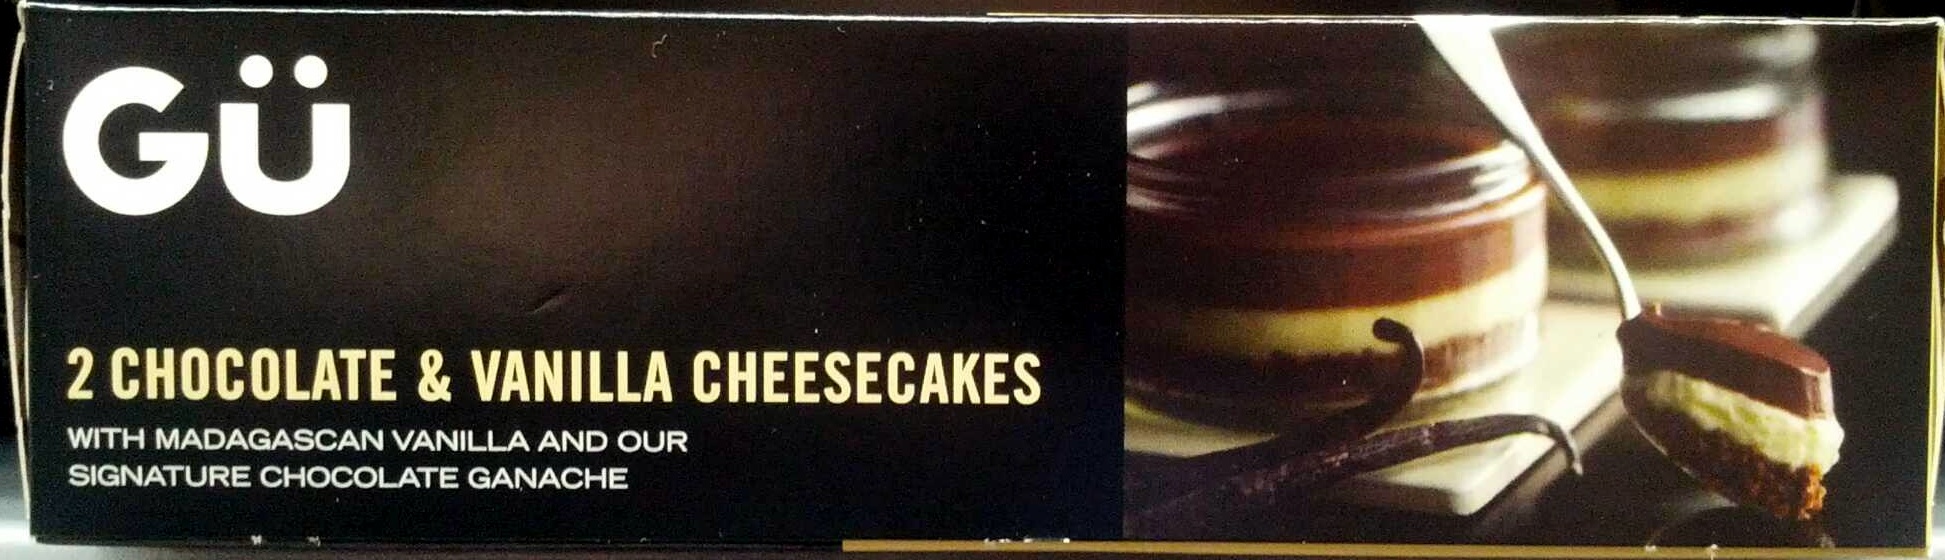 2 cheesecakes au chocolat & vanille de madagascar - Product - en